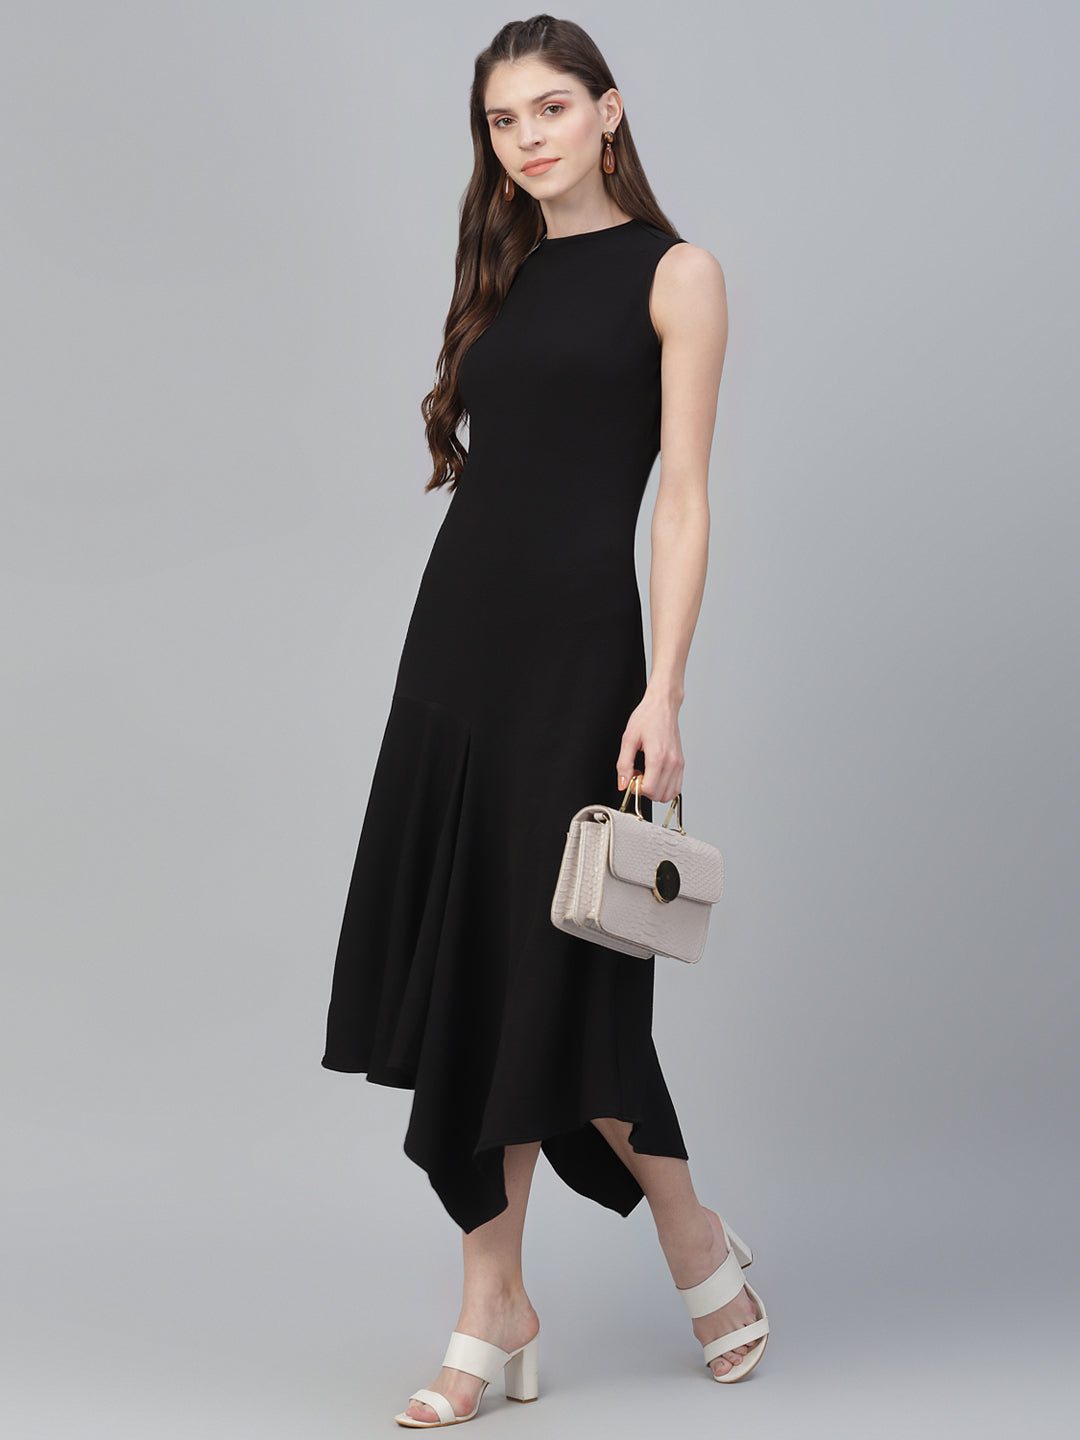 Athena Women Black Solid A-Line Dress - Athena Lifestyle